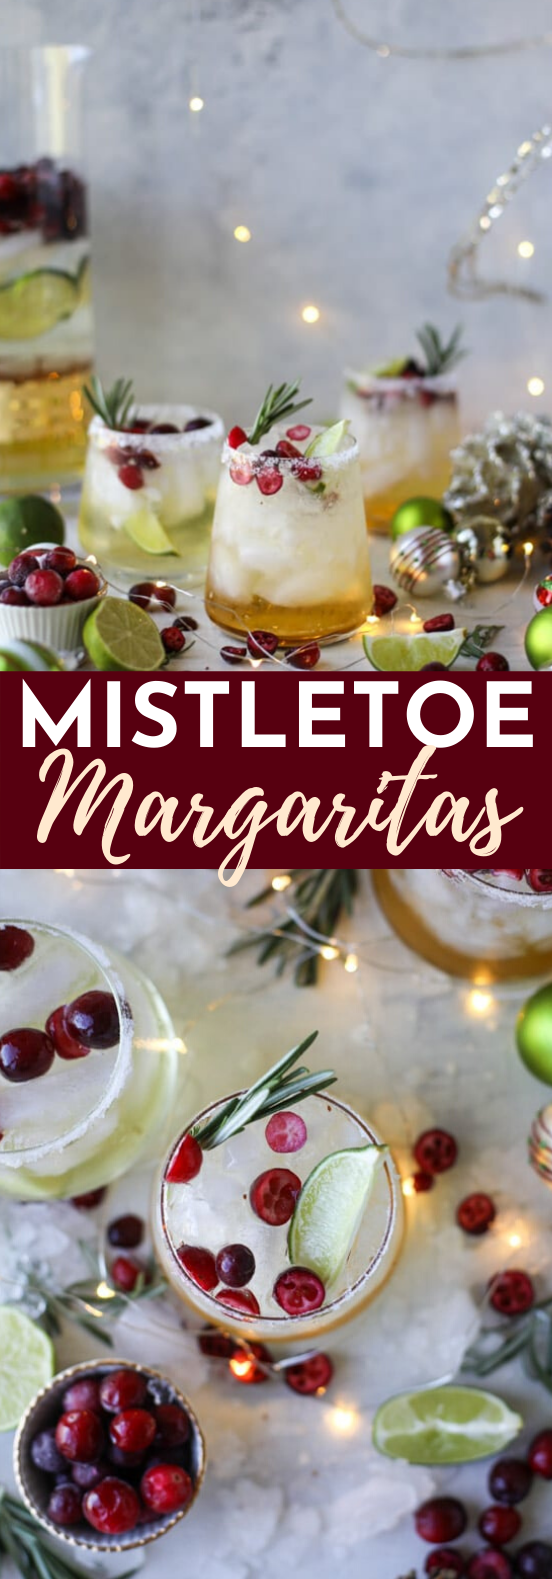 MISTLETOE MARGARITAS #drinks #alcohol #cocktails #christmas #party